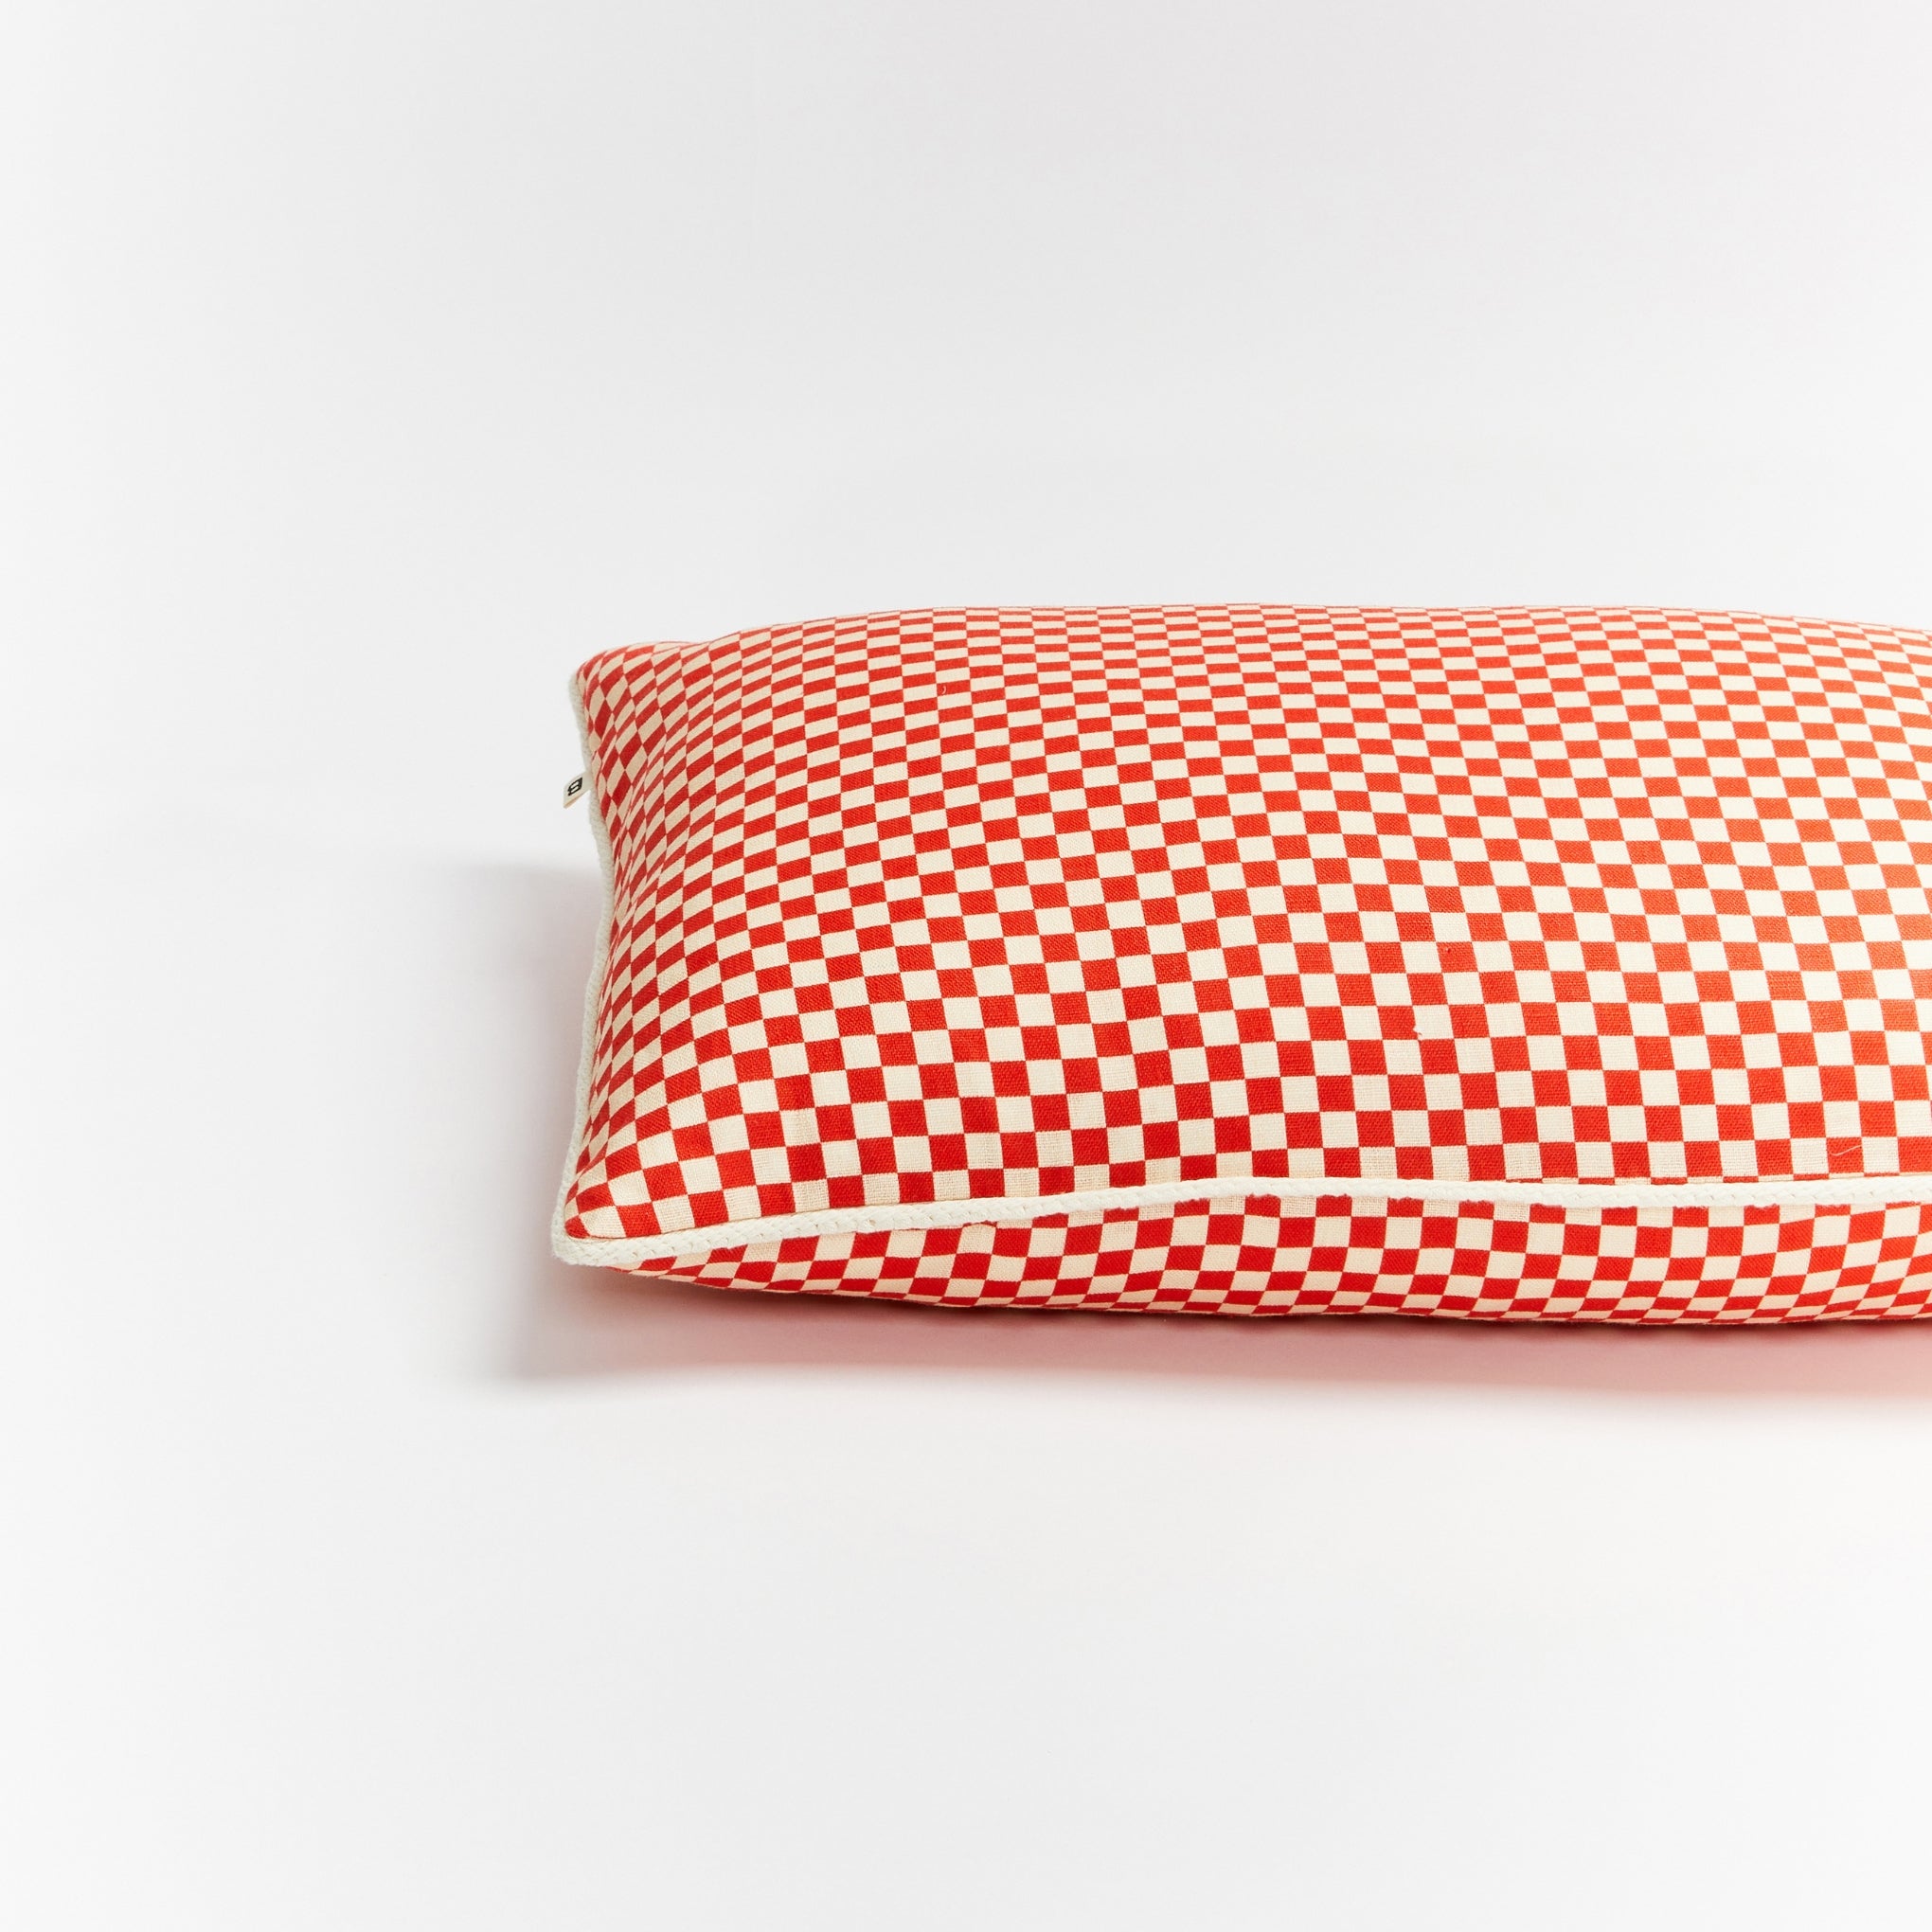 Tiny Checkers Red Peach 60x40cm Cushion